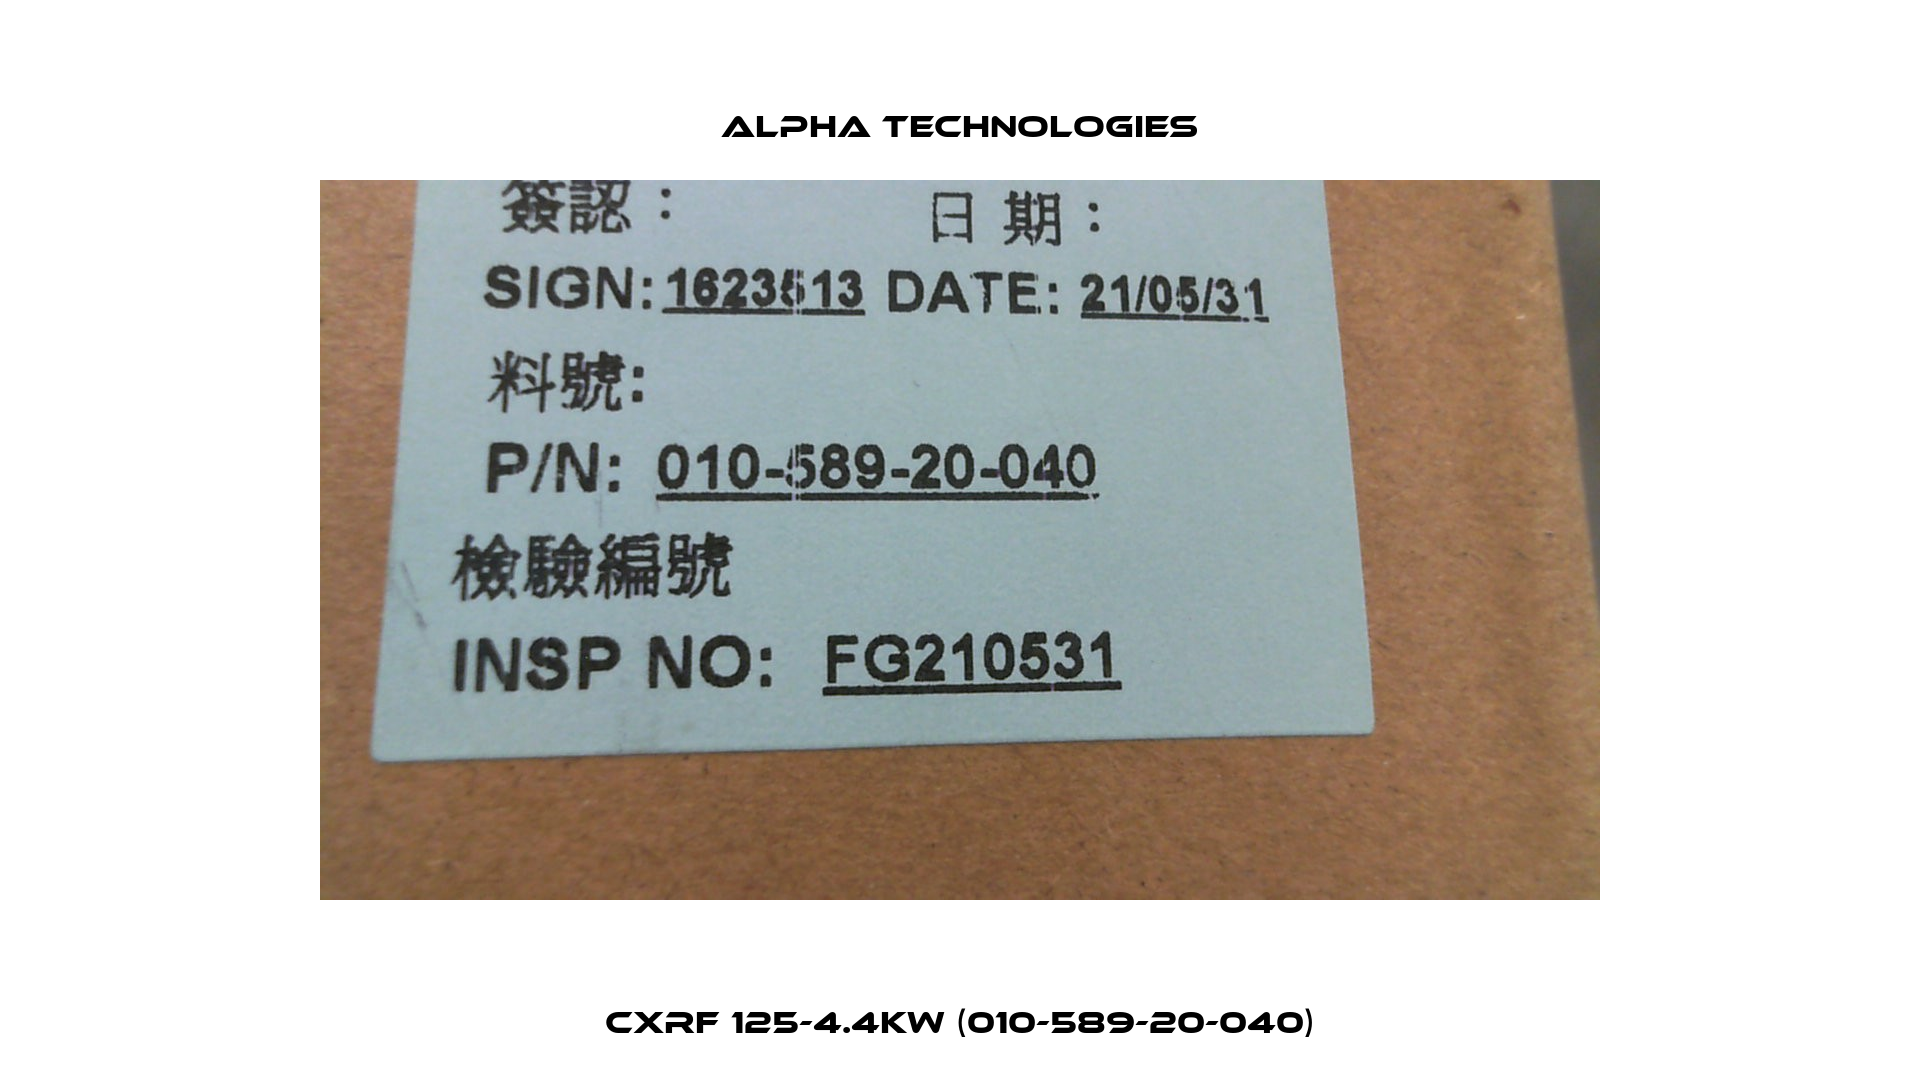 CXRF 125-4.4kW (010-589-20-040) Alpha Technologies